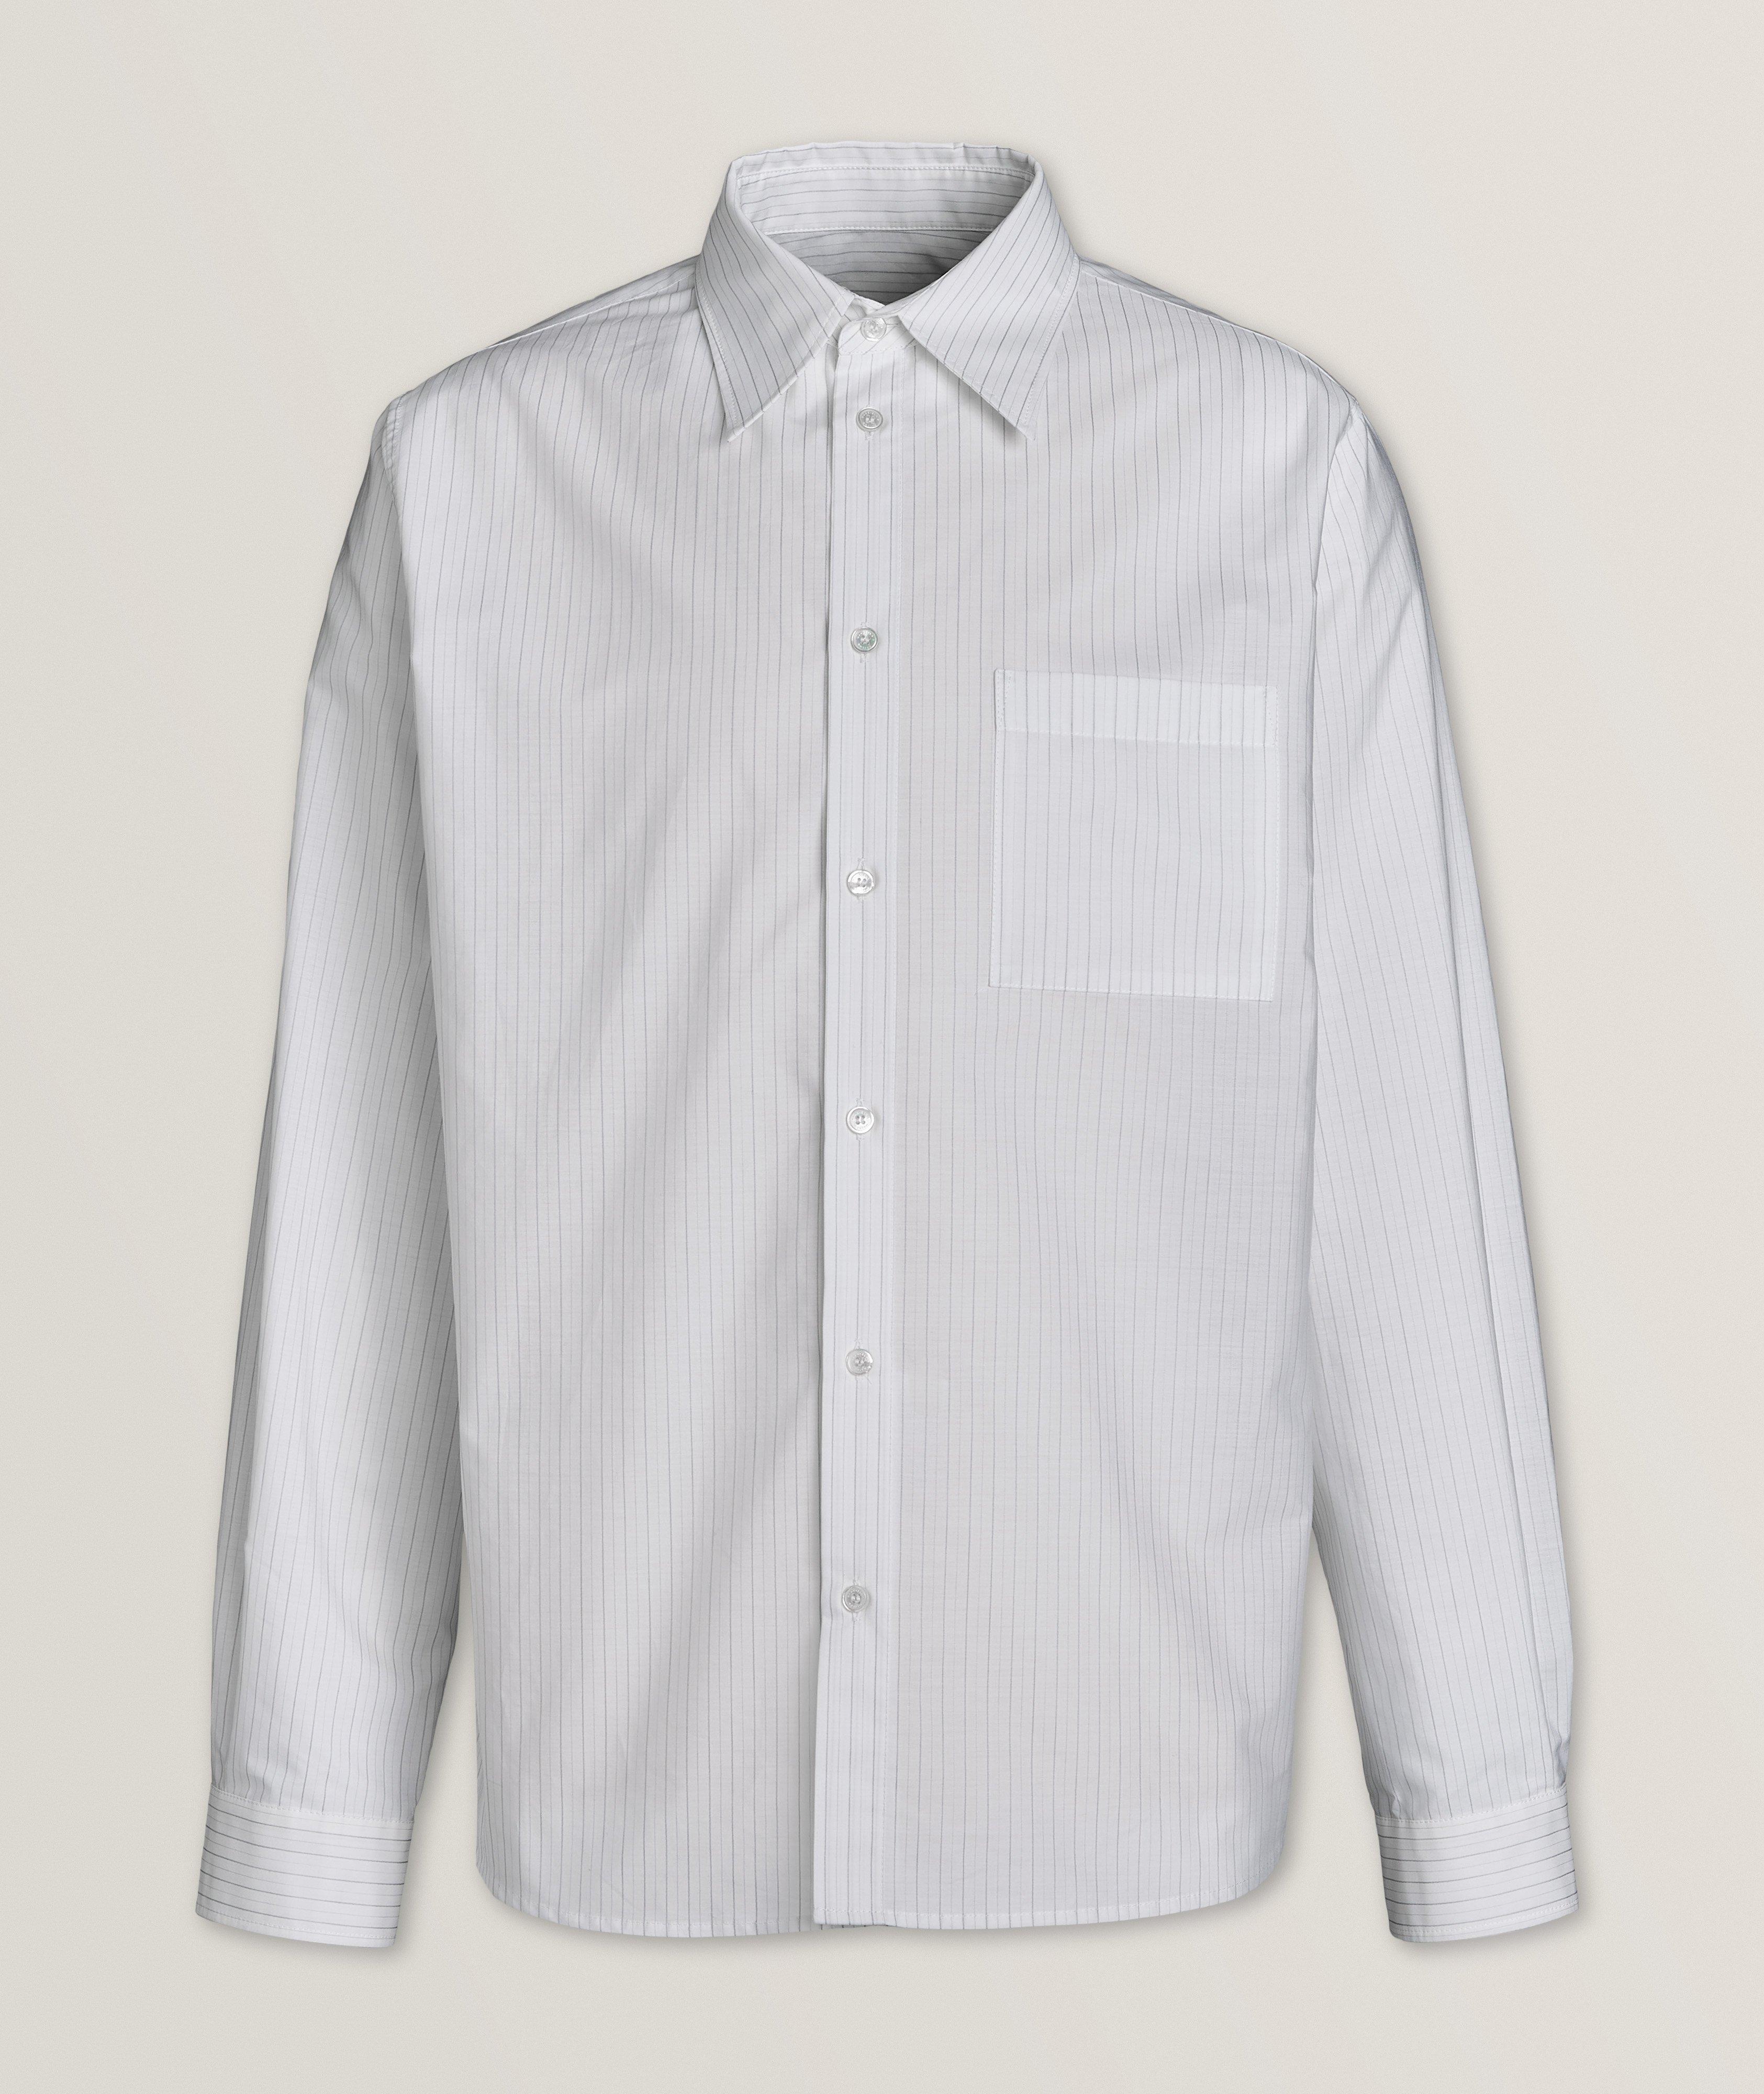 Striped Cotton Sport Shirt image 0